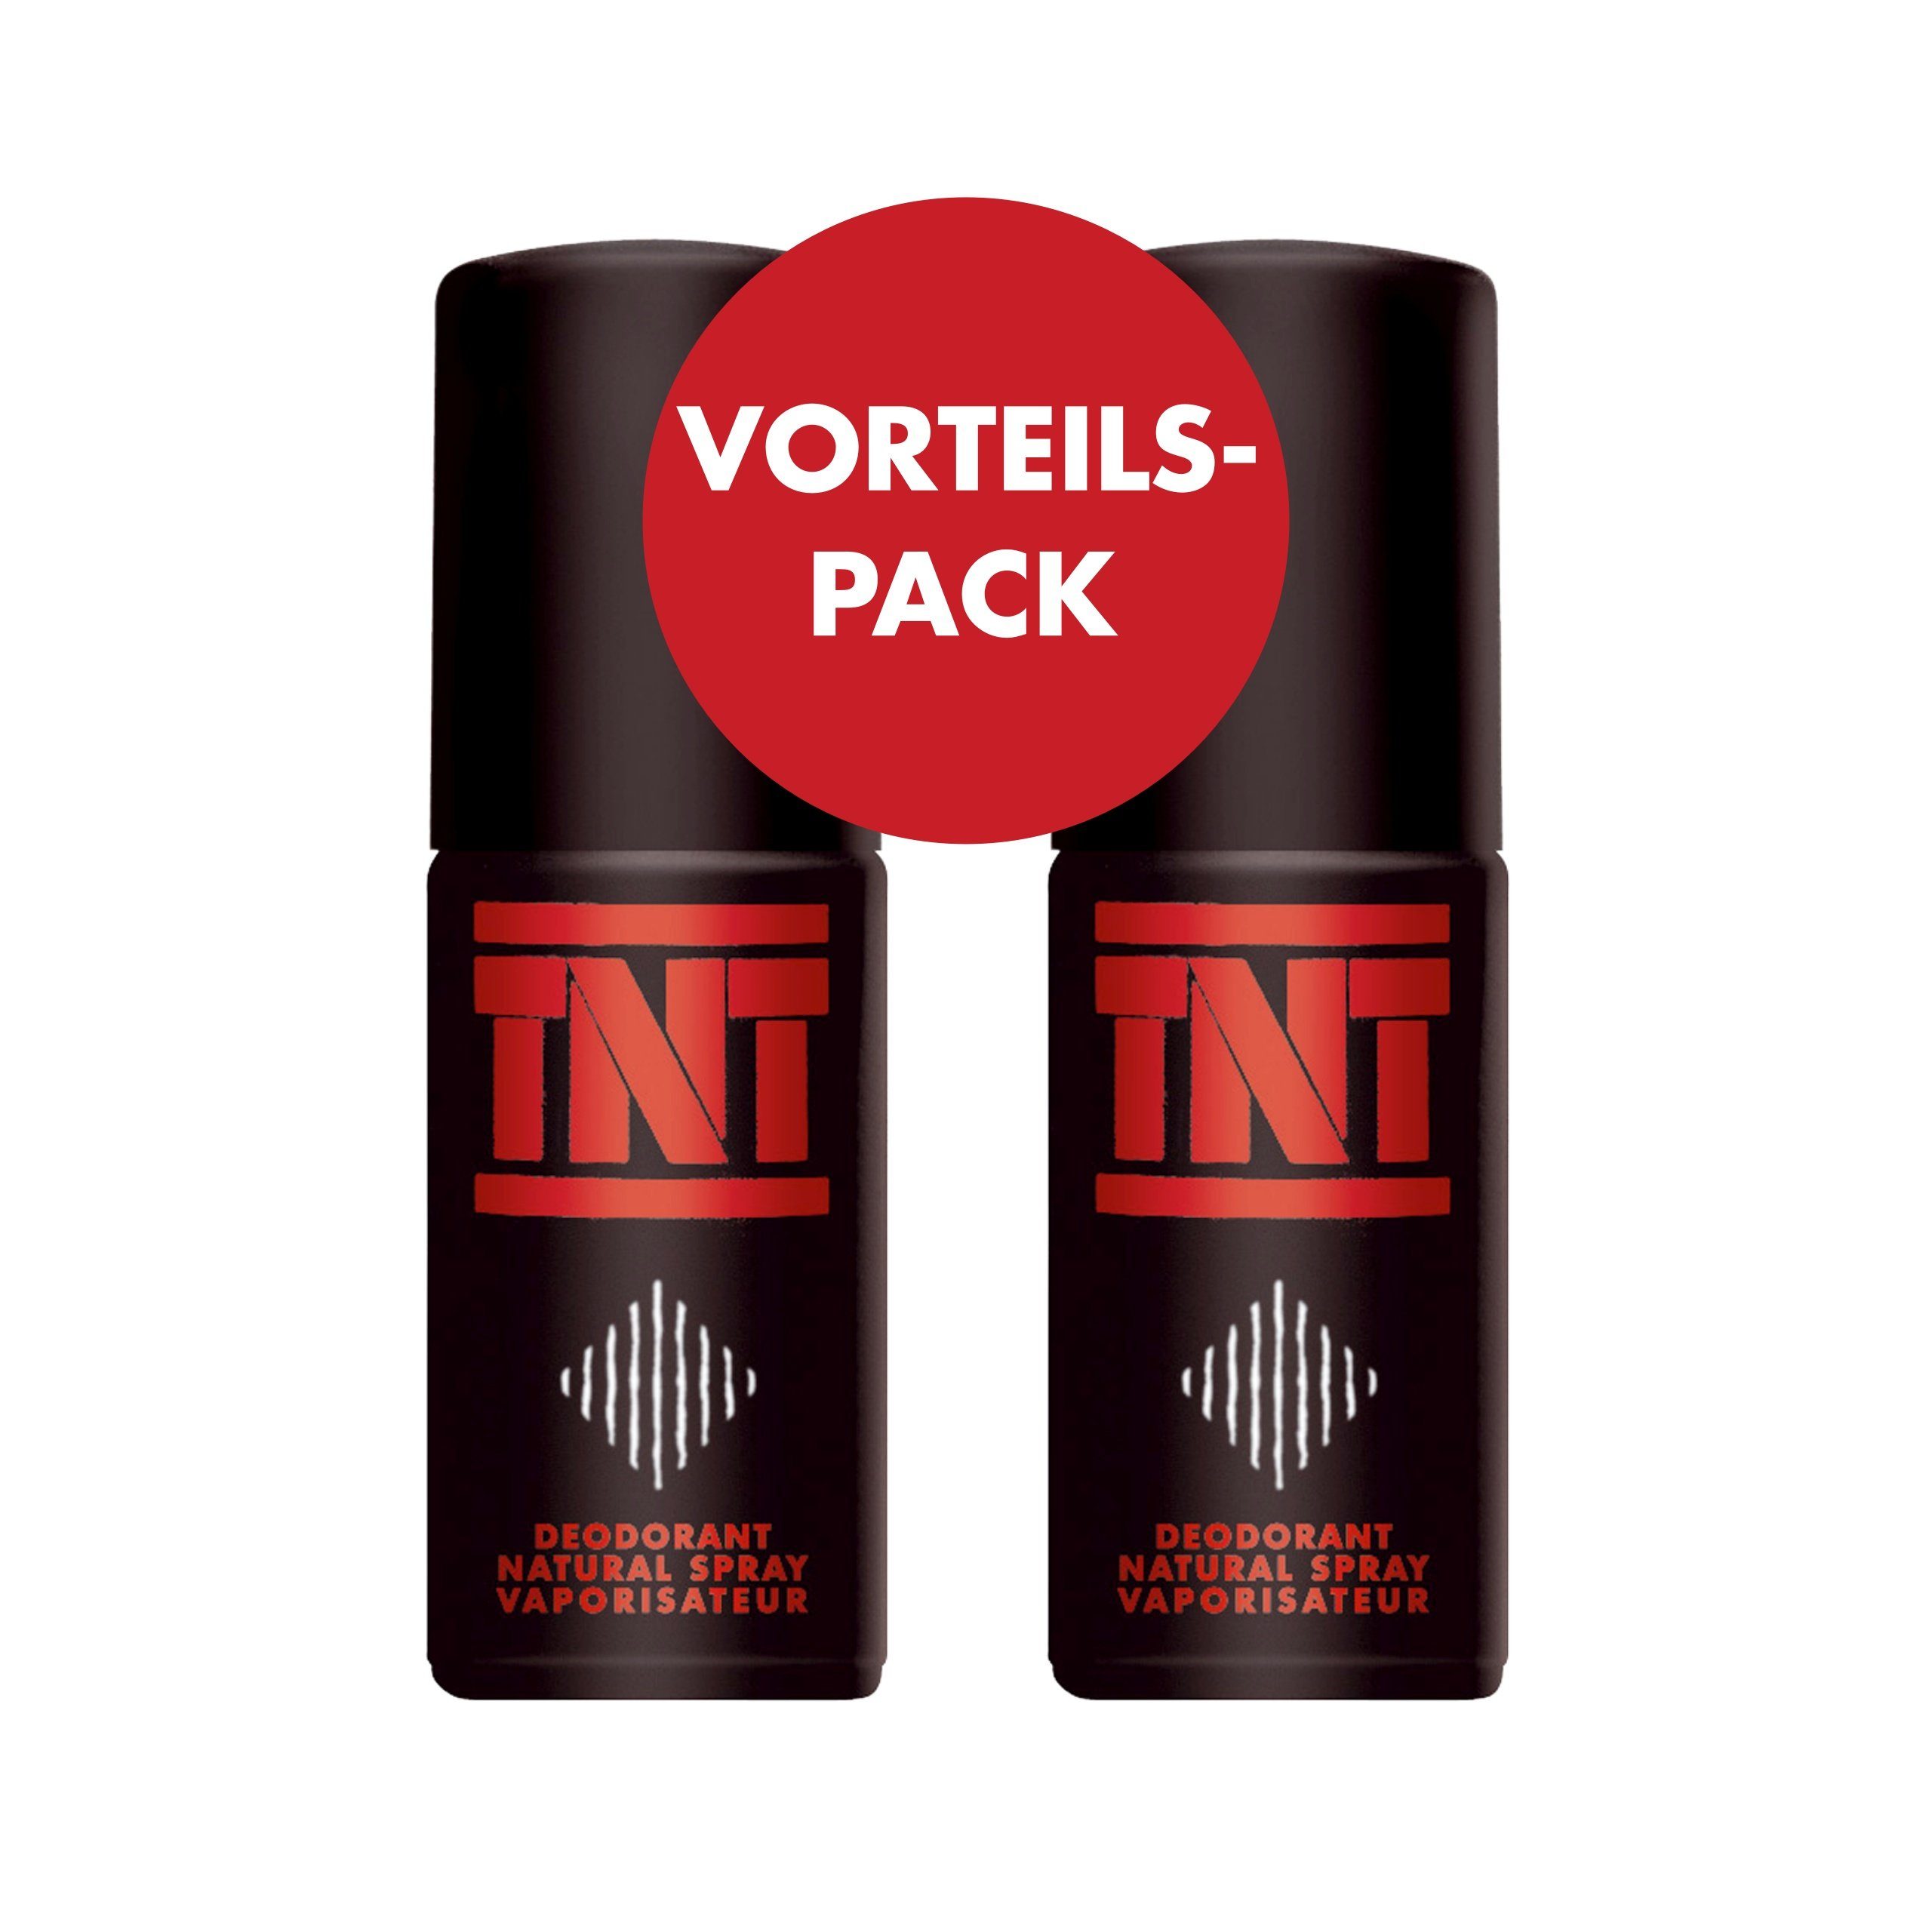 TNT Duft-Set TNT Vorteilspack 2 x Deo Natural Spray 100 ml | Duft-Sets